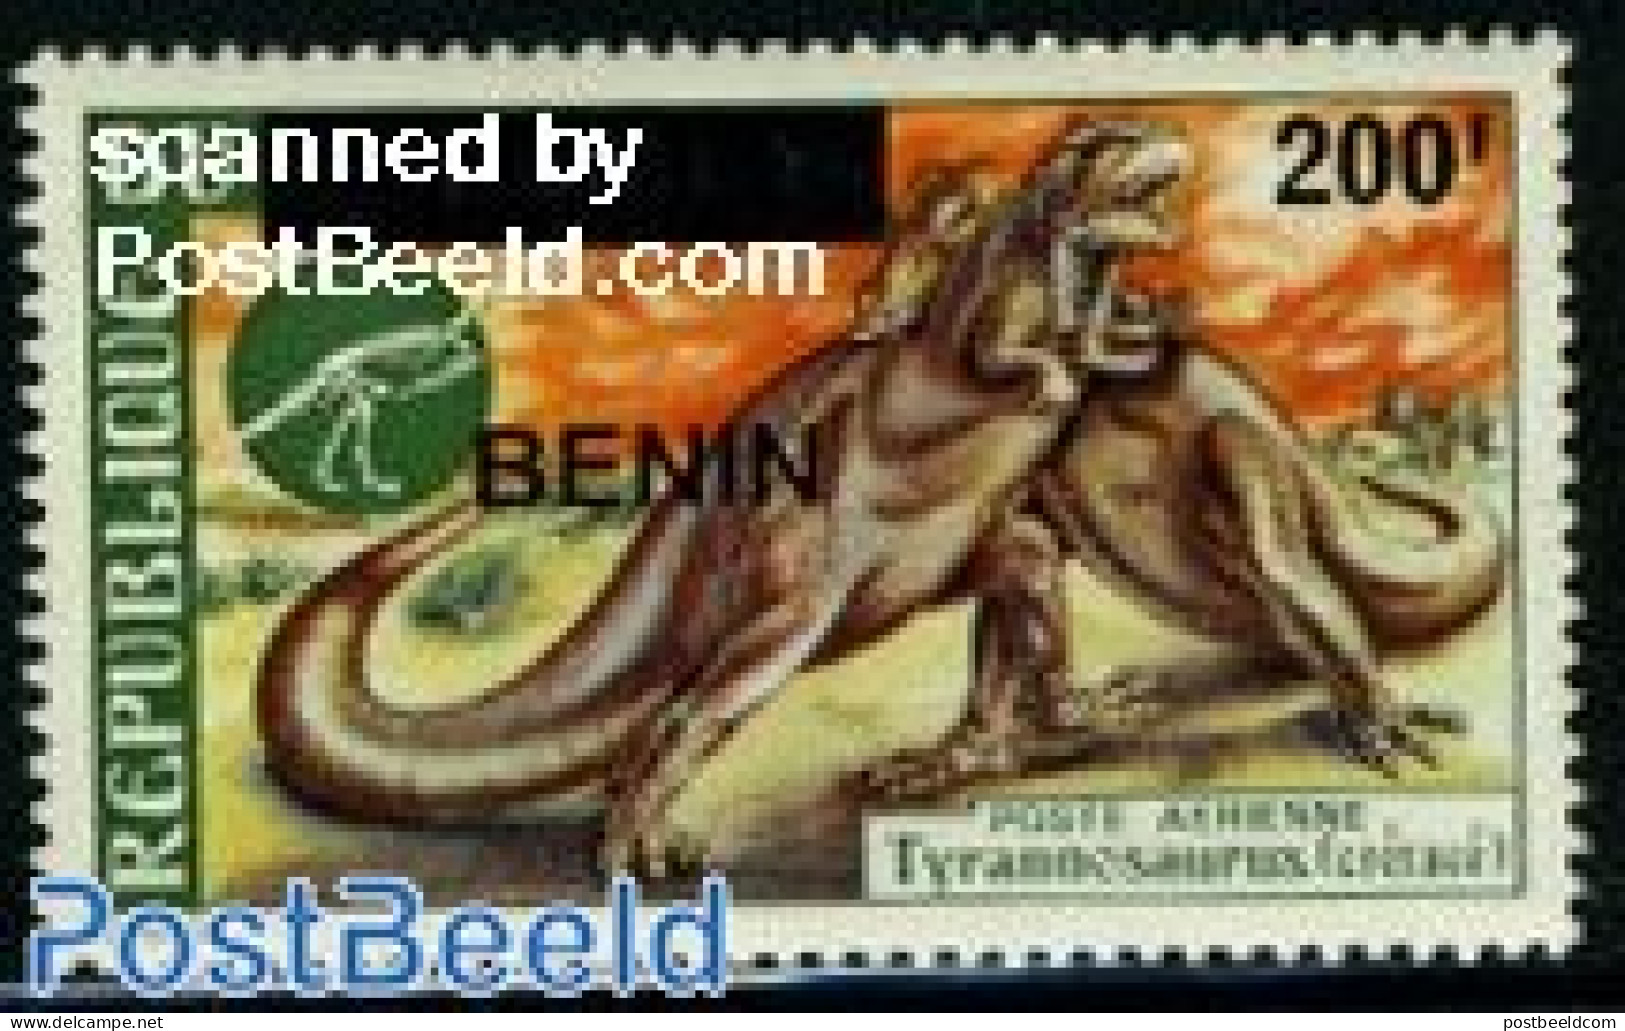 Benin 2008 Preh. Animal Overprint 1v, Mint NH, Nature - Prehistoric Animals - Ungebraucht